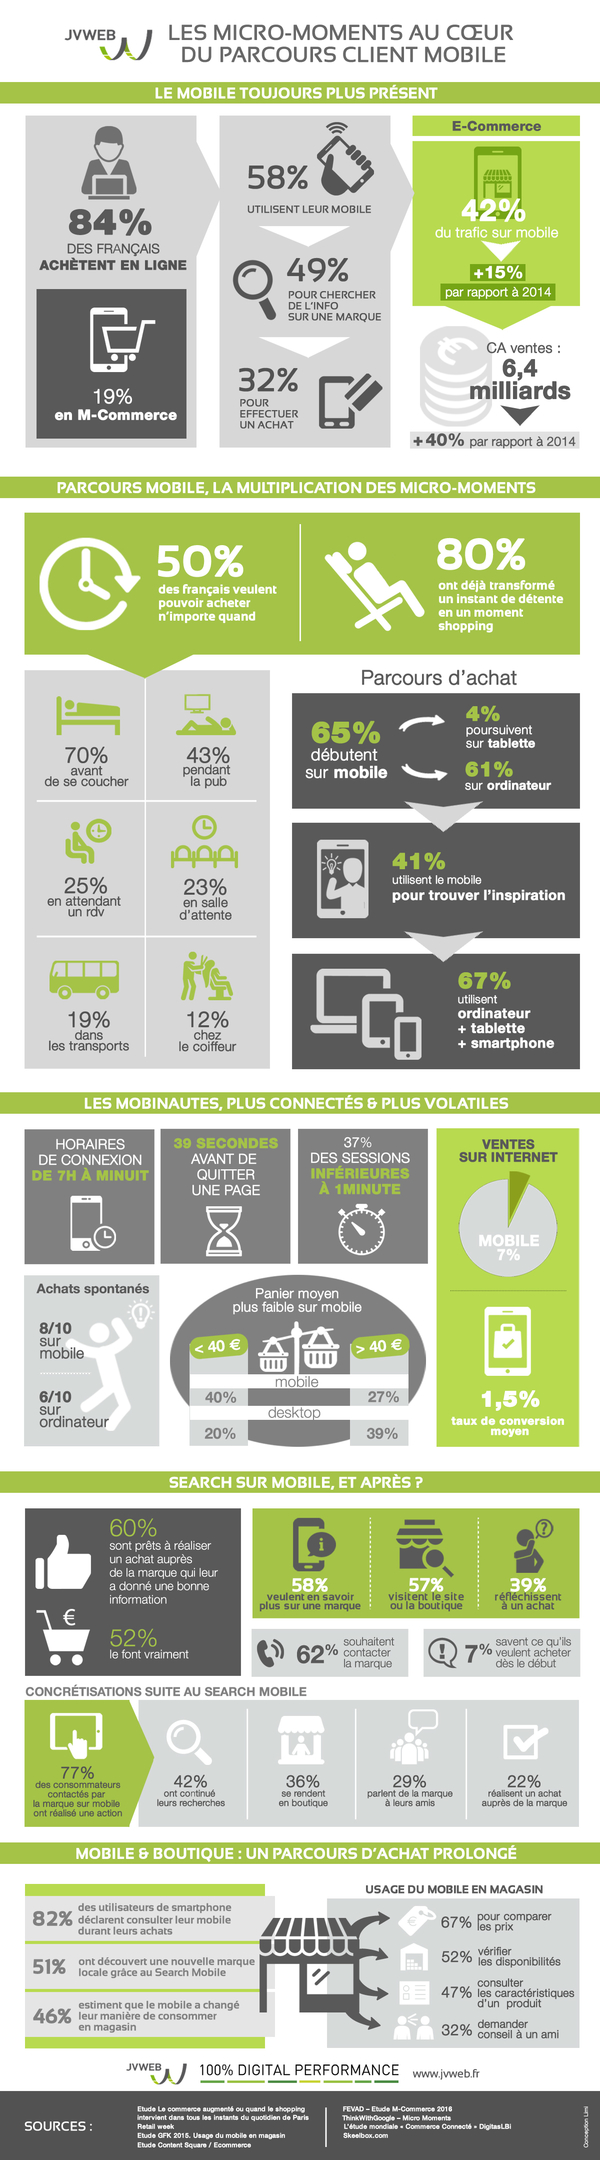 infographic-wait-marketing-mobile